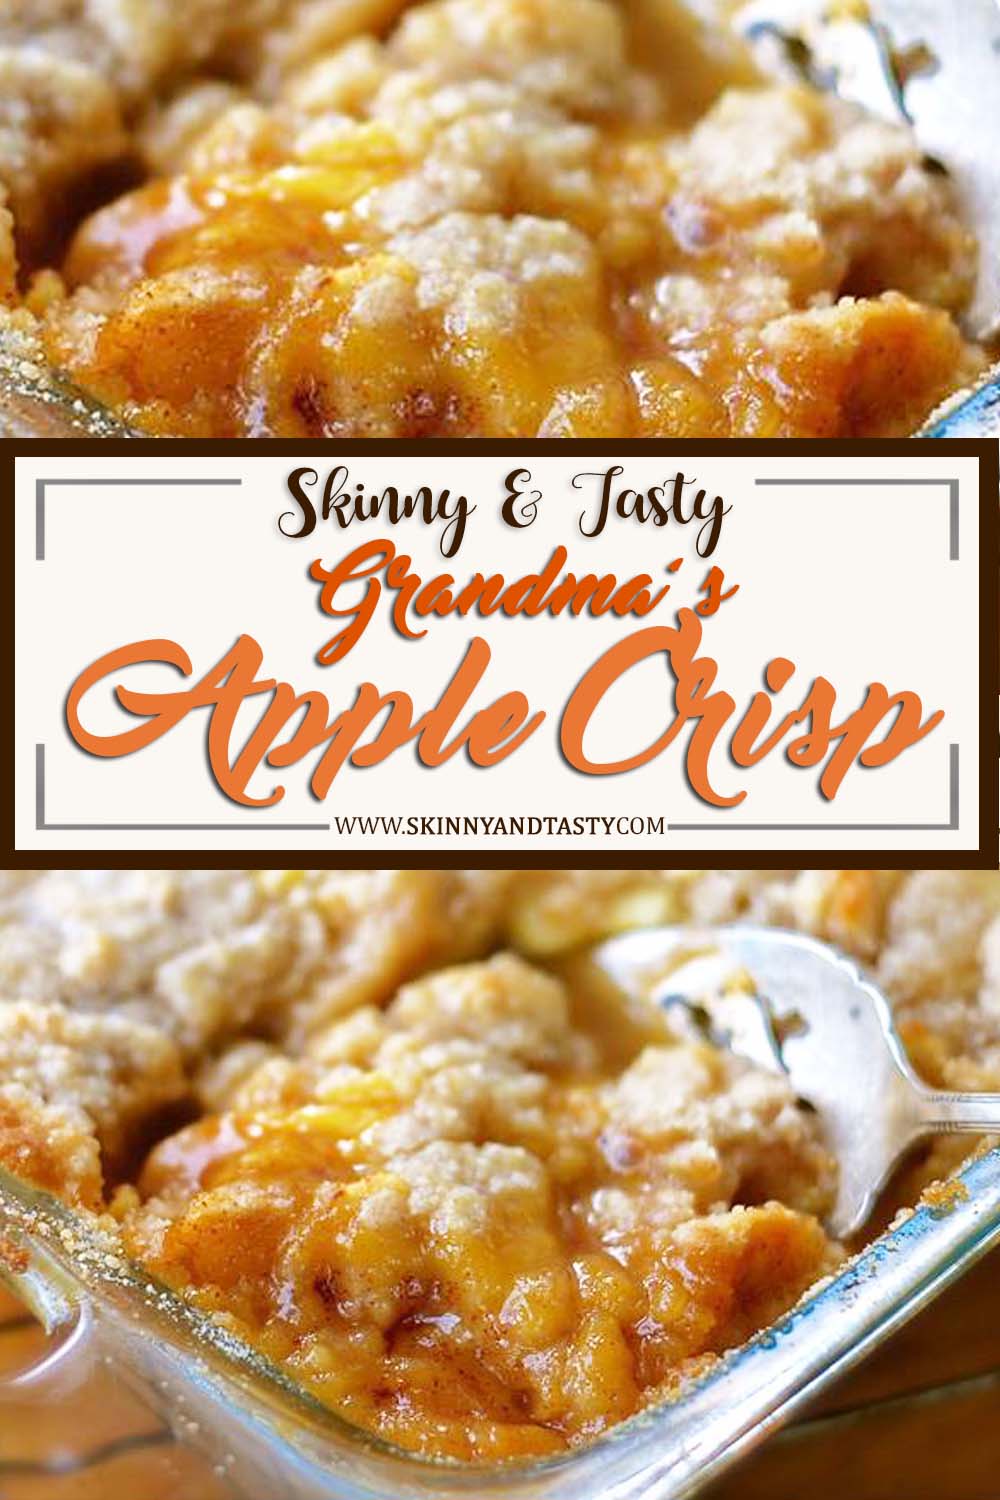 Grandma's Apple Crisp Recipe